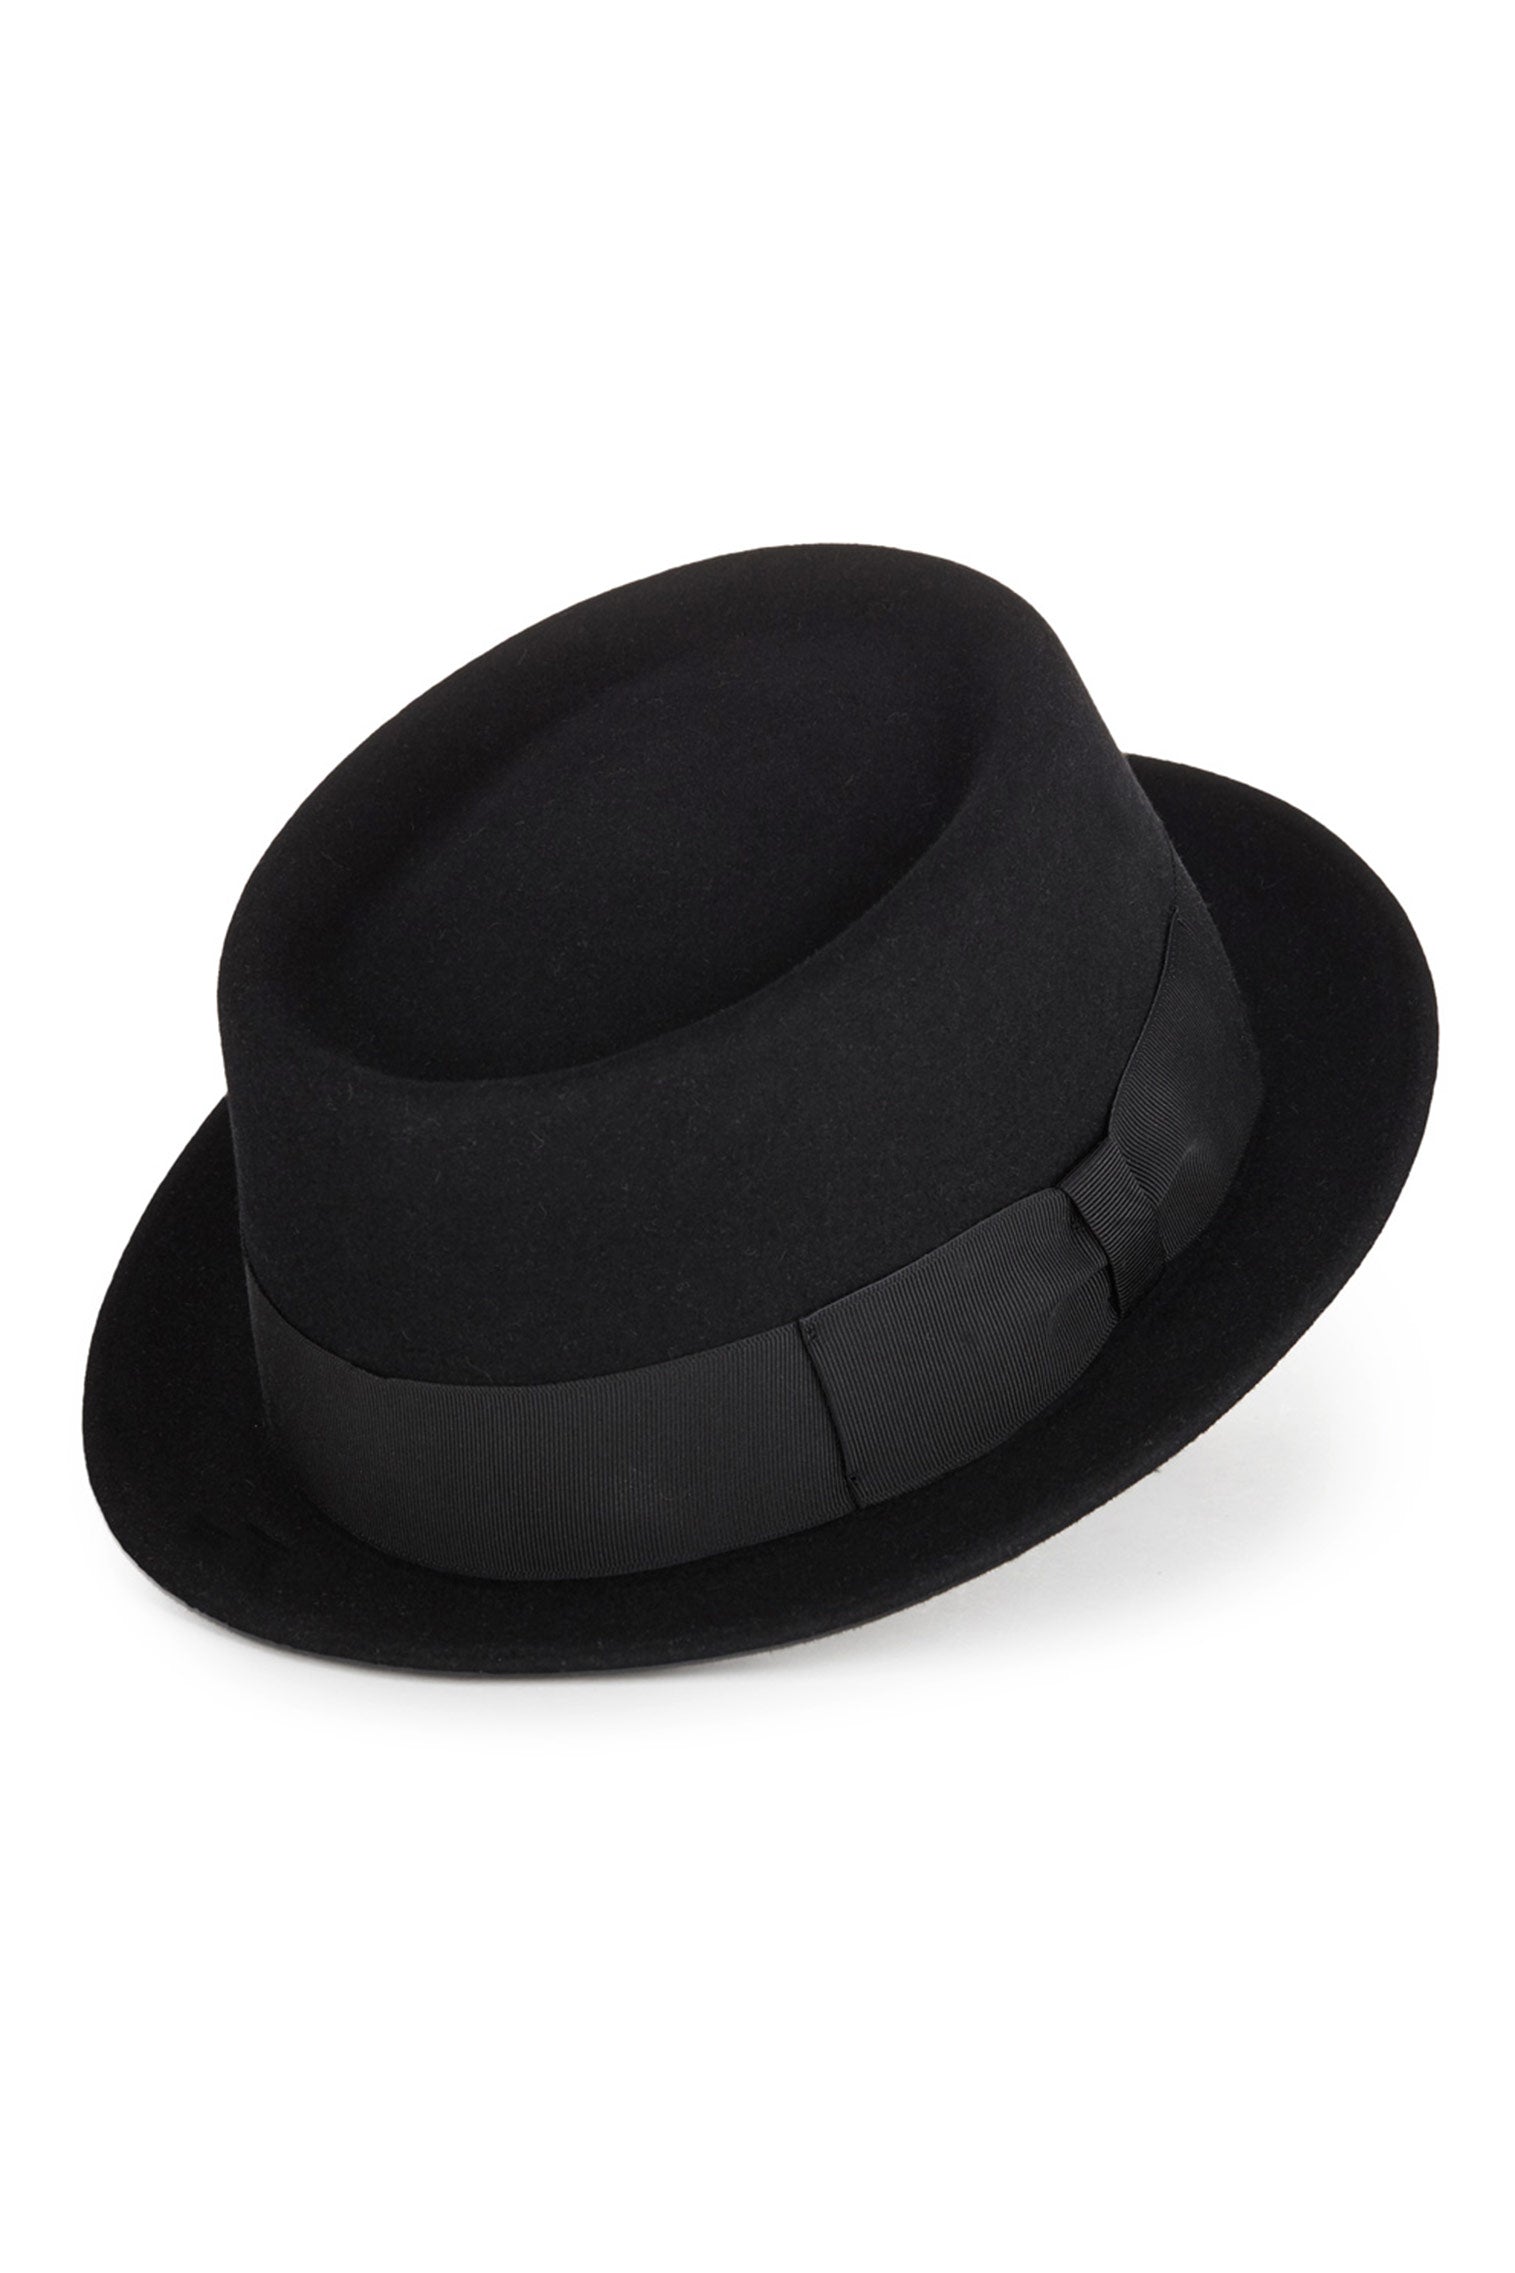 Sinatra Porkpie - Trilbies, Porkpie Hats & Cloches - Lock & Co. Hatters London UK